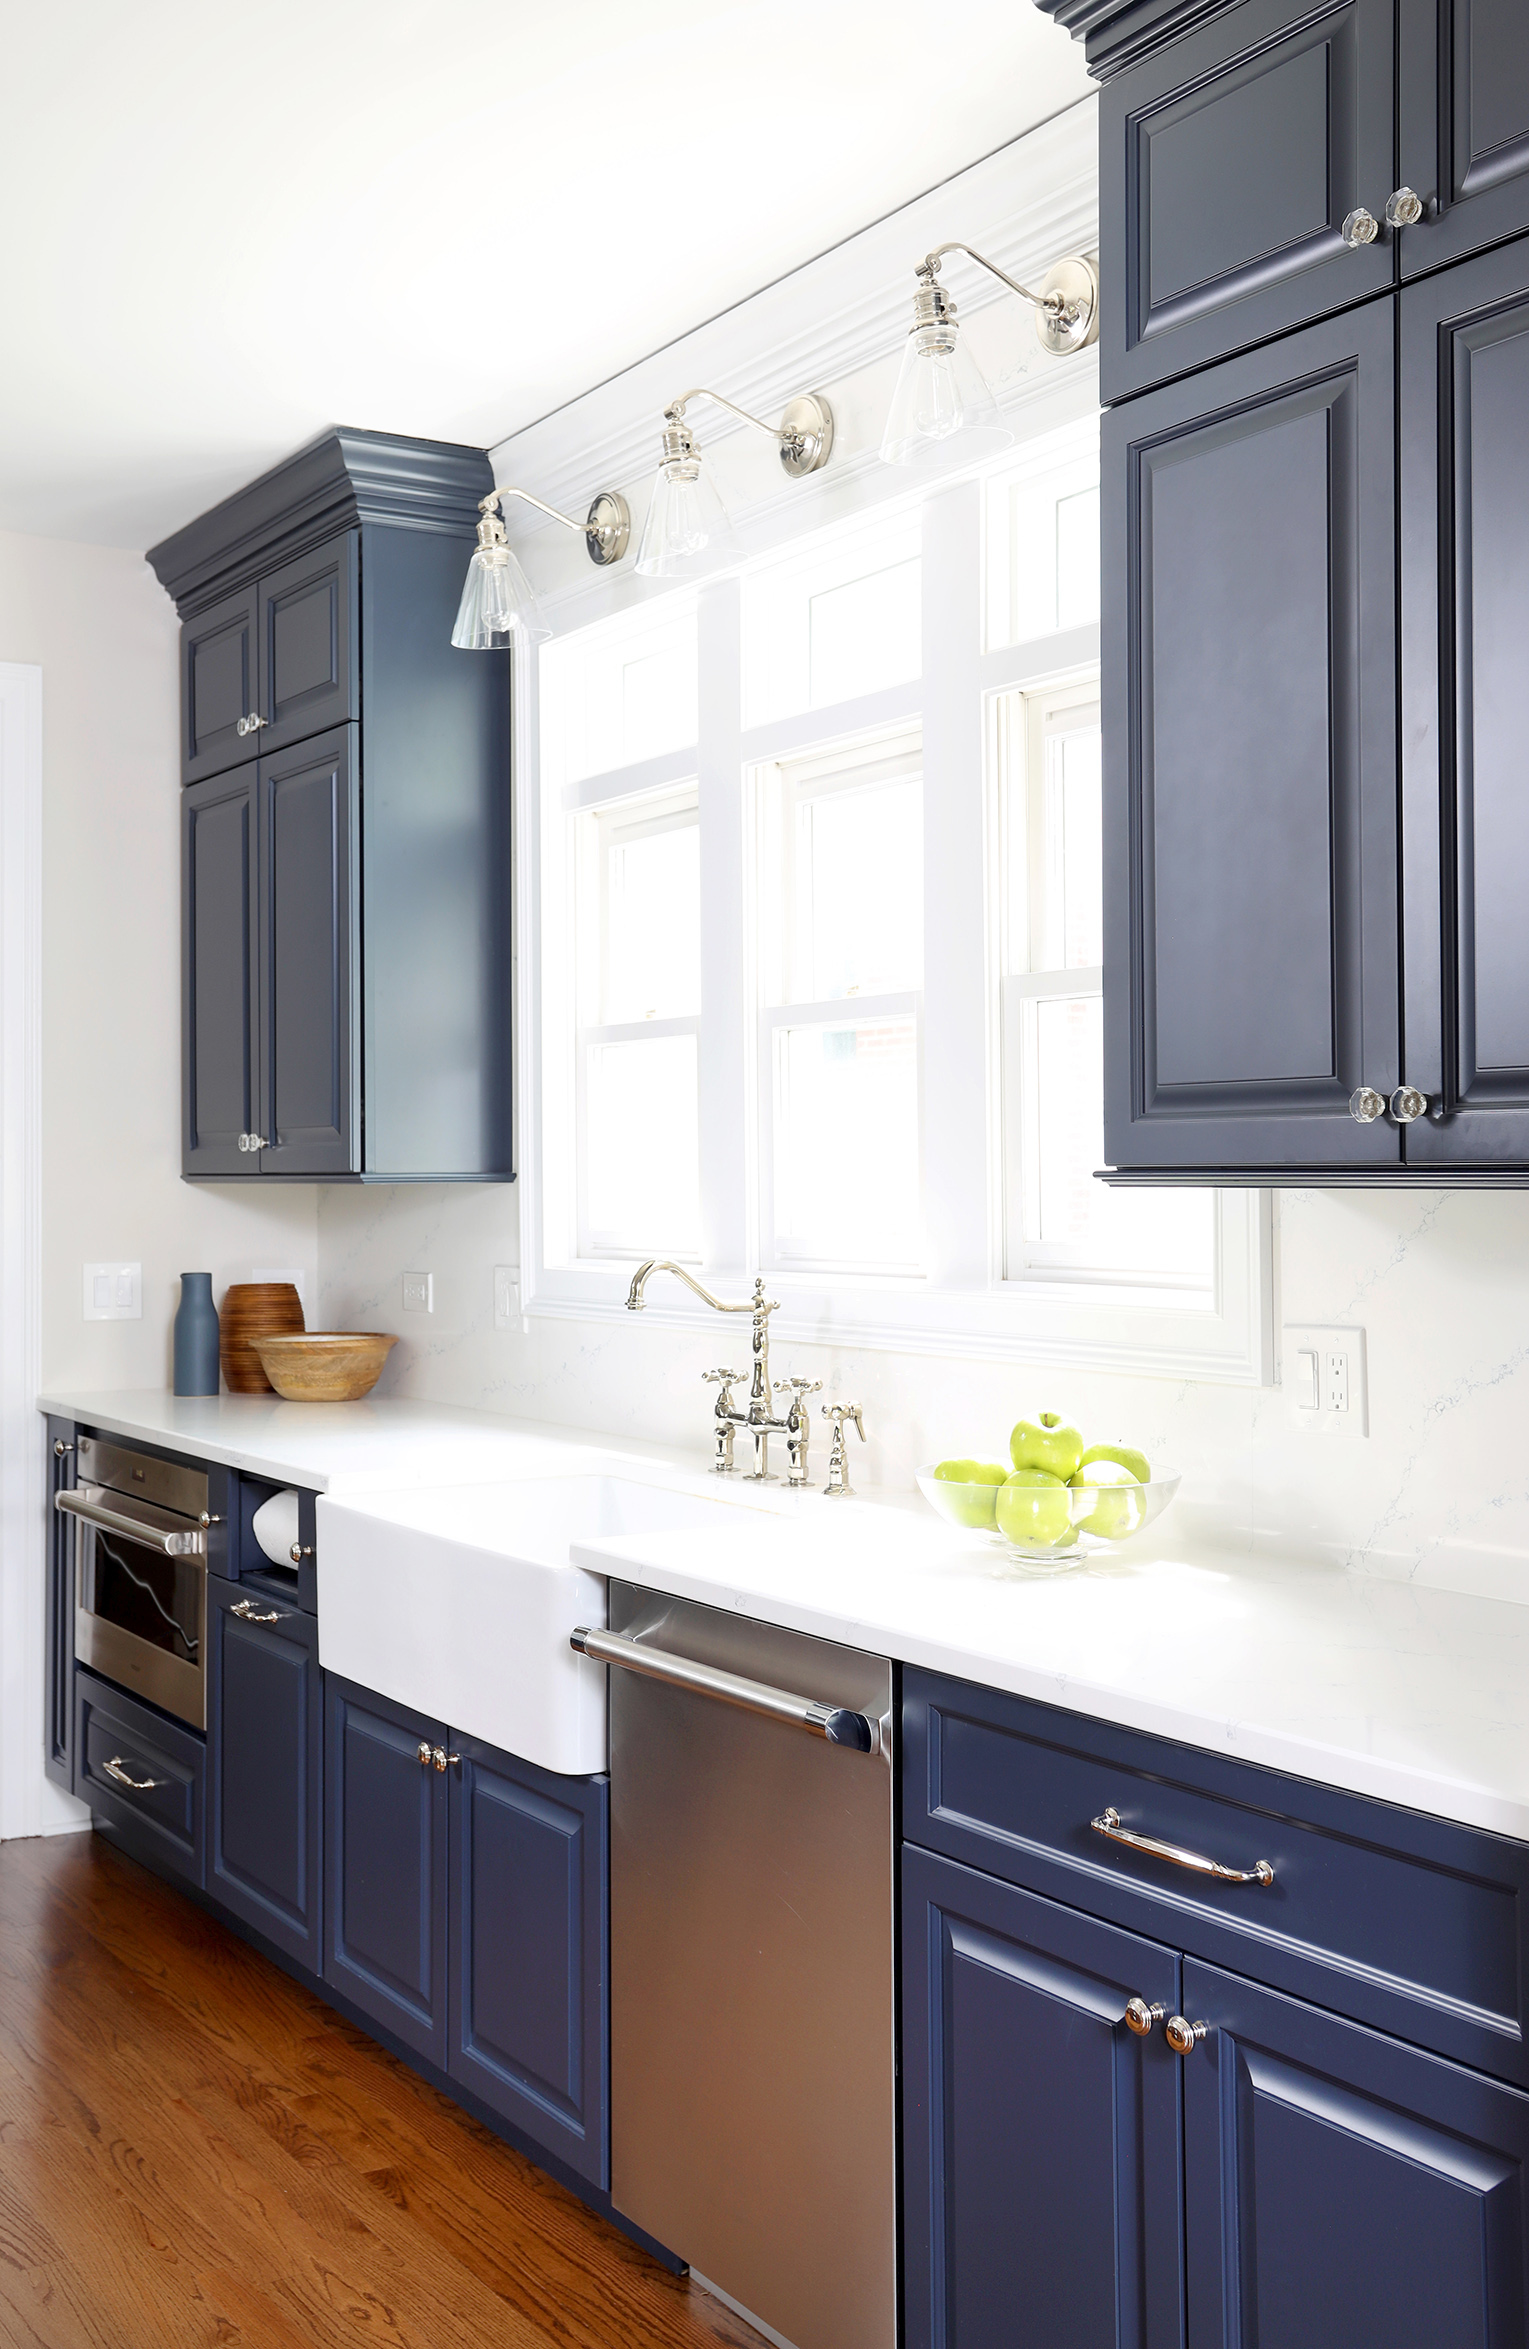 Blue kitchen cabinets with apron front sink and white backsplash tile